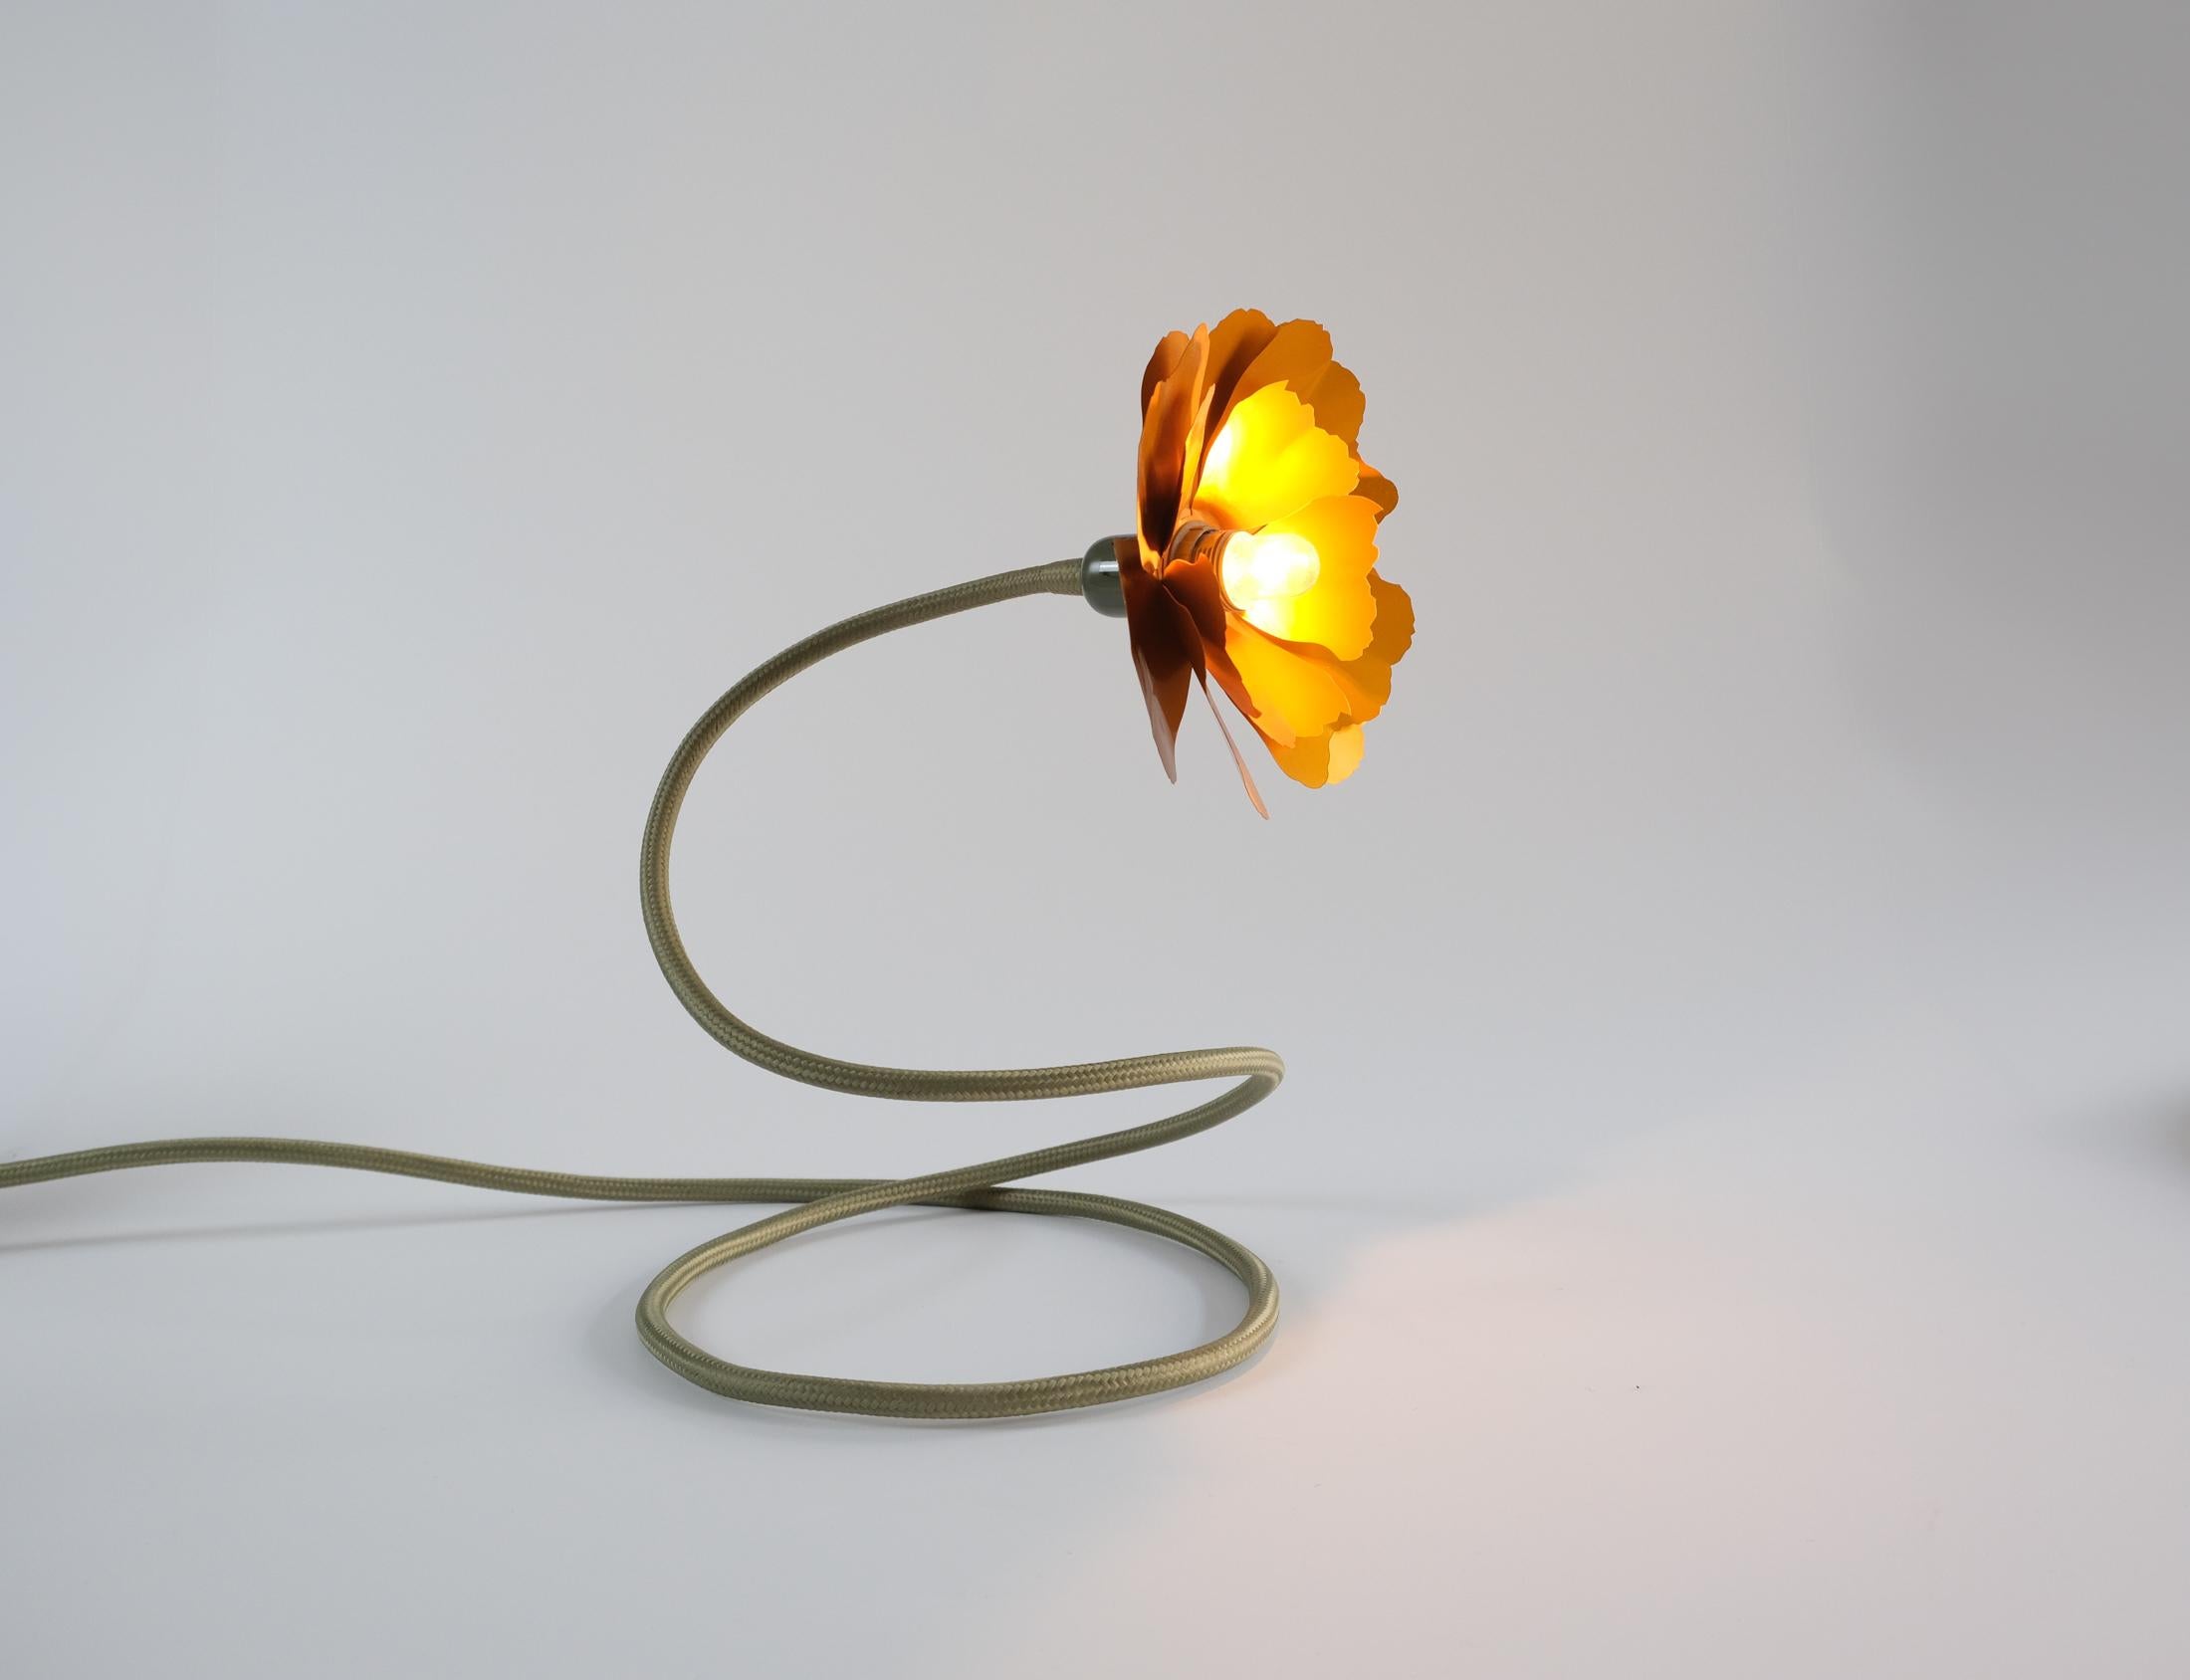 Contemporary Helena Christensen's Flexible Flower Lamp for Habitat “V.I.P” Collection, 2004 For Sale